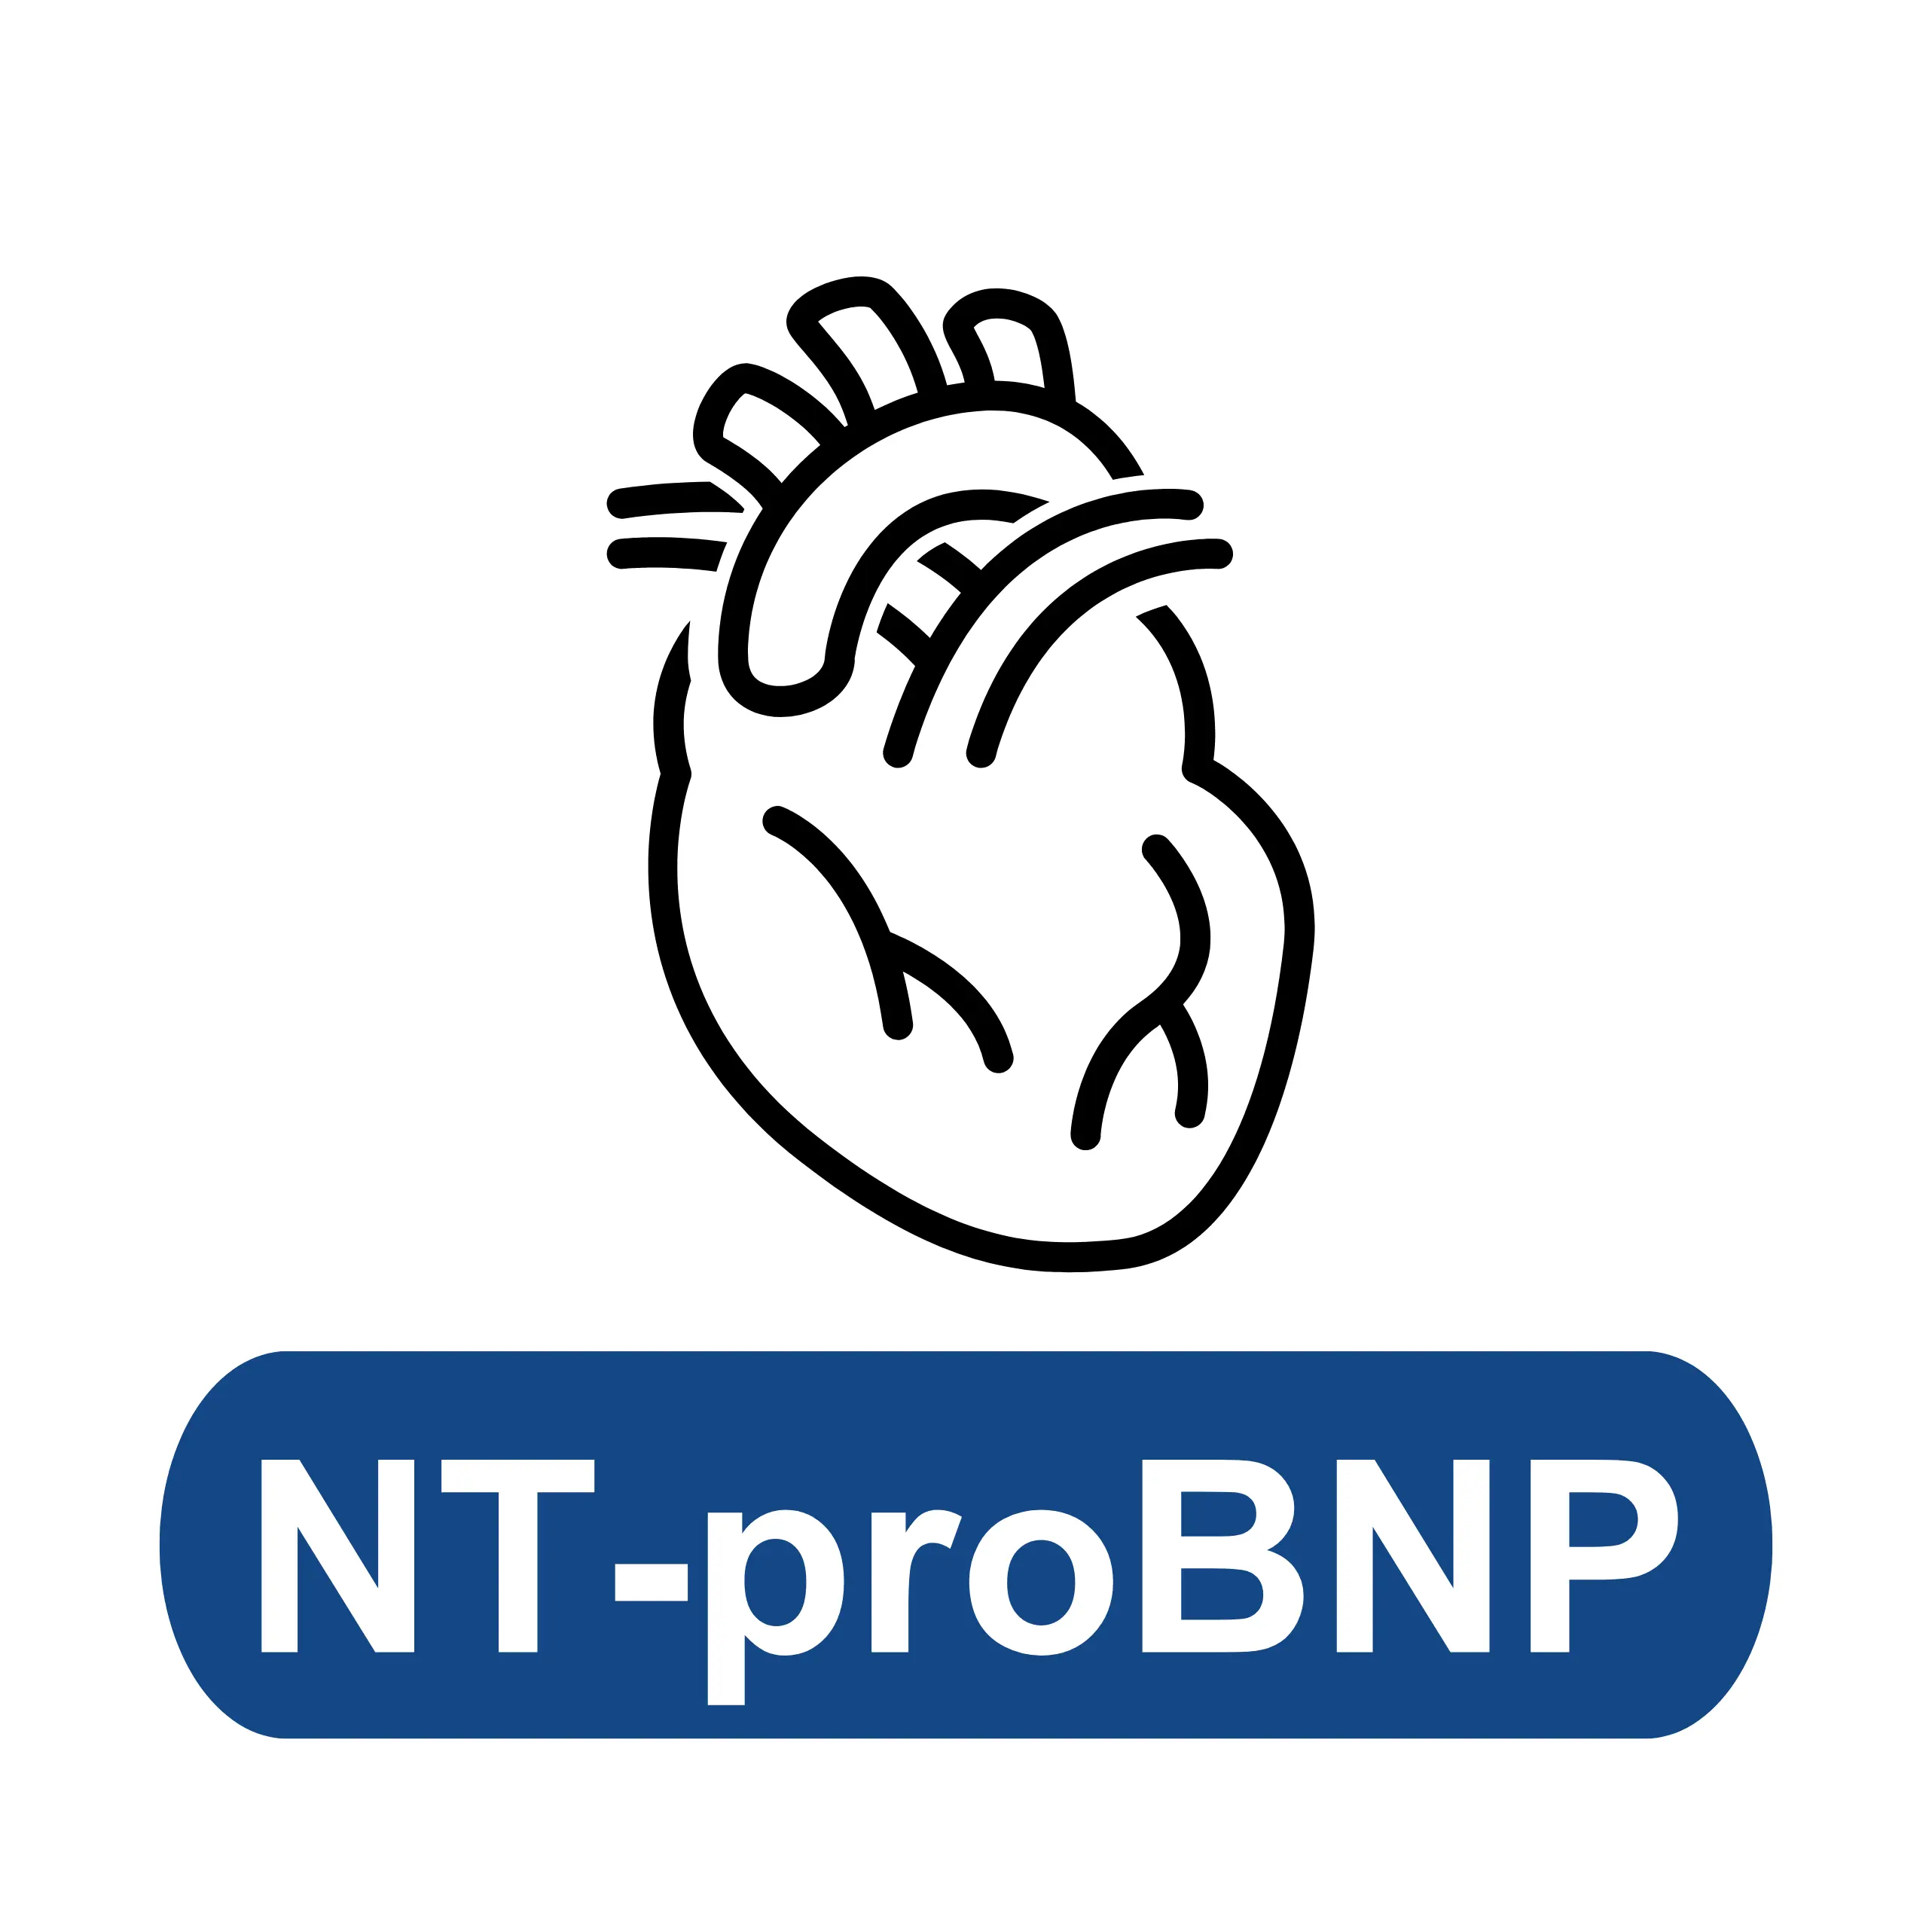 N-terminal Pro B Type Natriuretic Peptide (NT-proBNP)